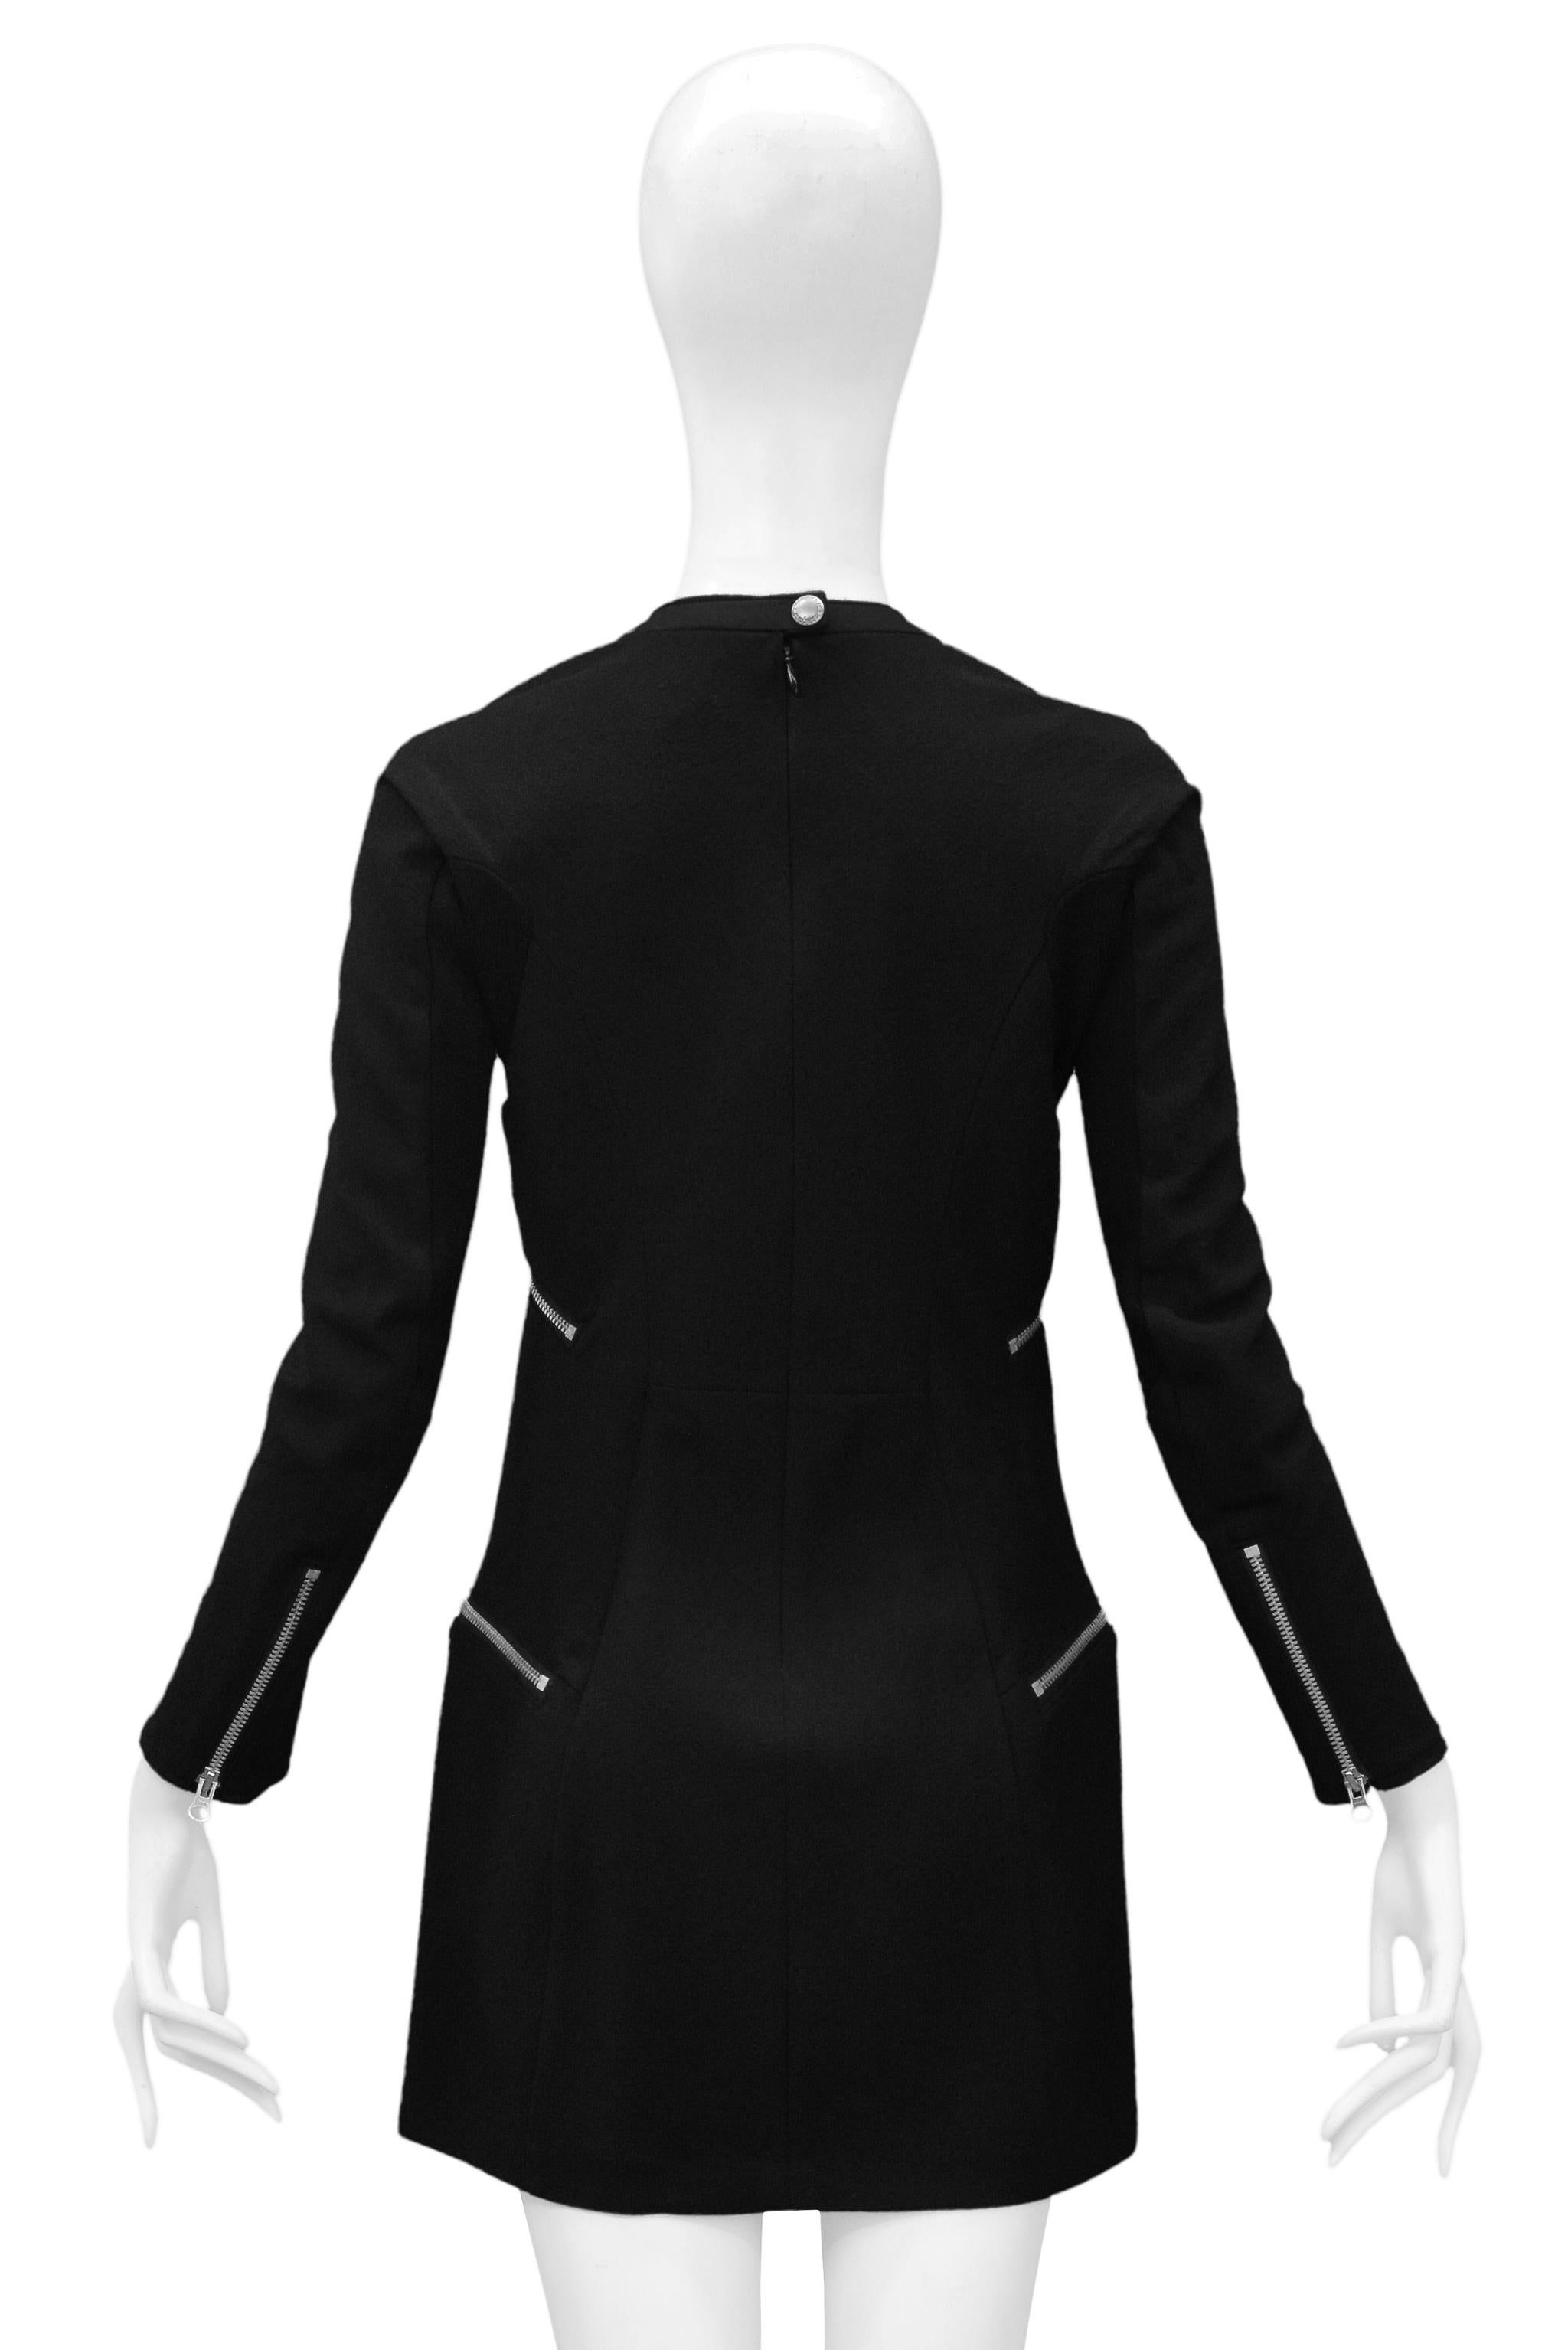 Junya Watanabe Black Wool Zipper Dress 2013 For Sale 2